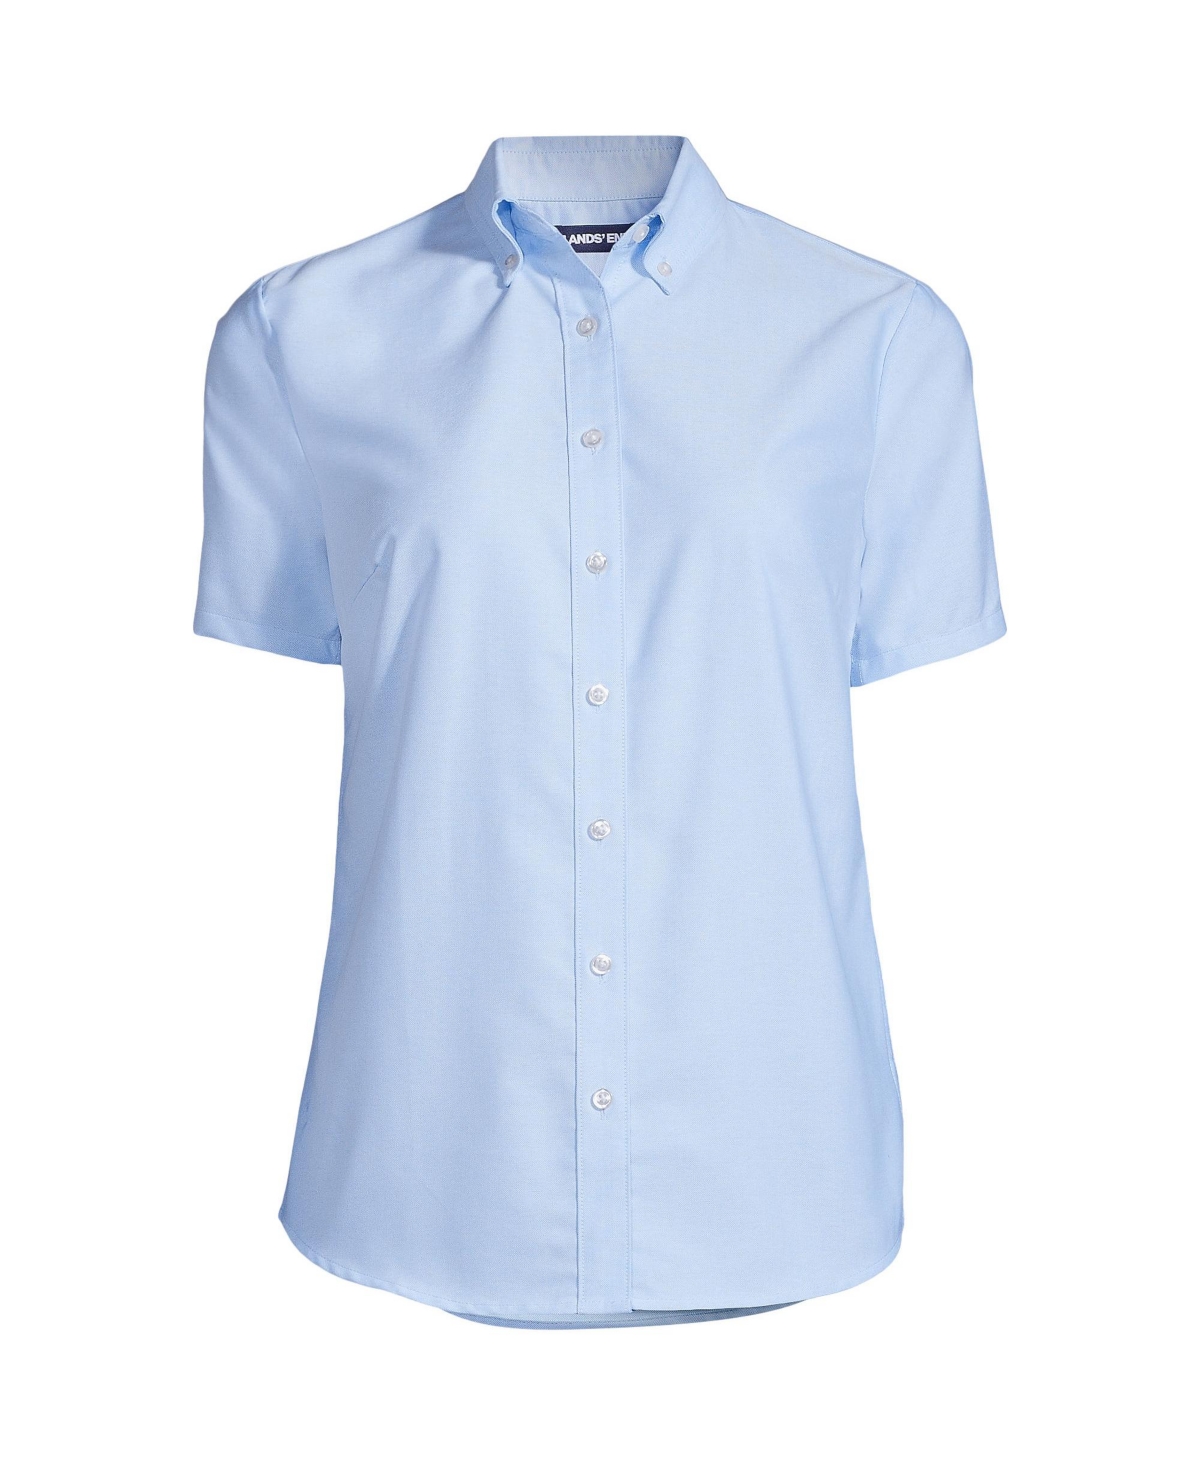 Women's School Uniform Short Sleeve Oxford Dress Shirt - French blue